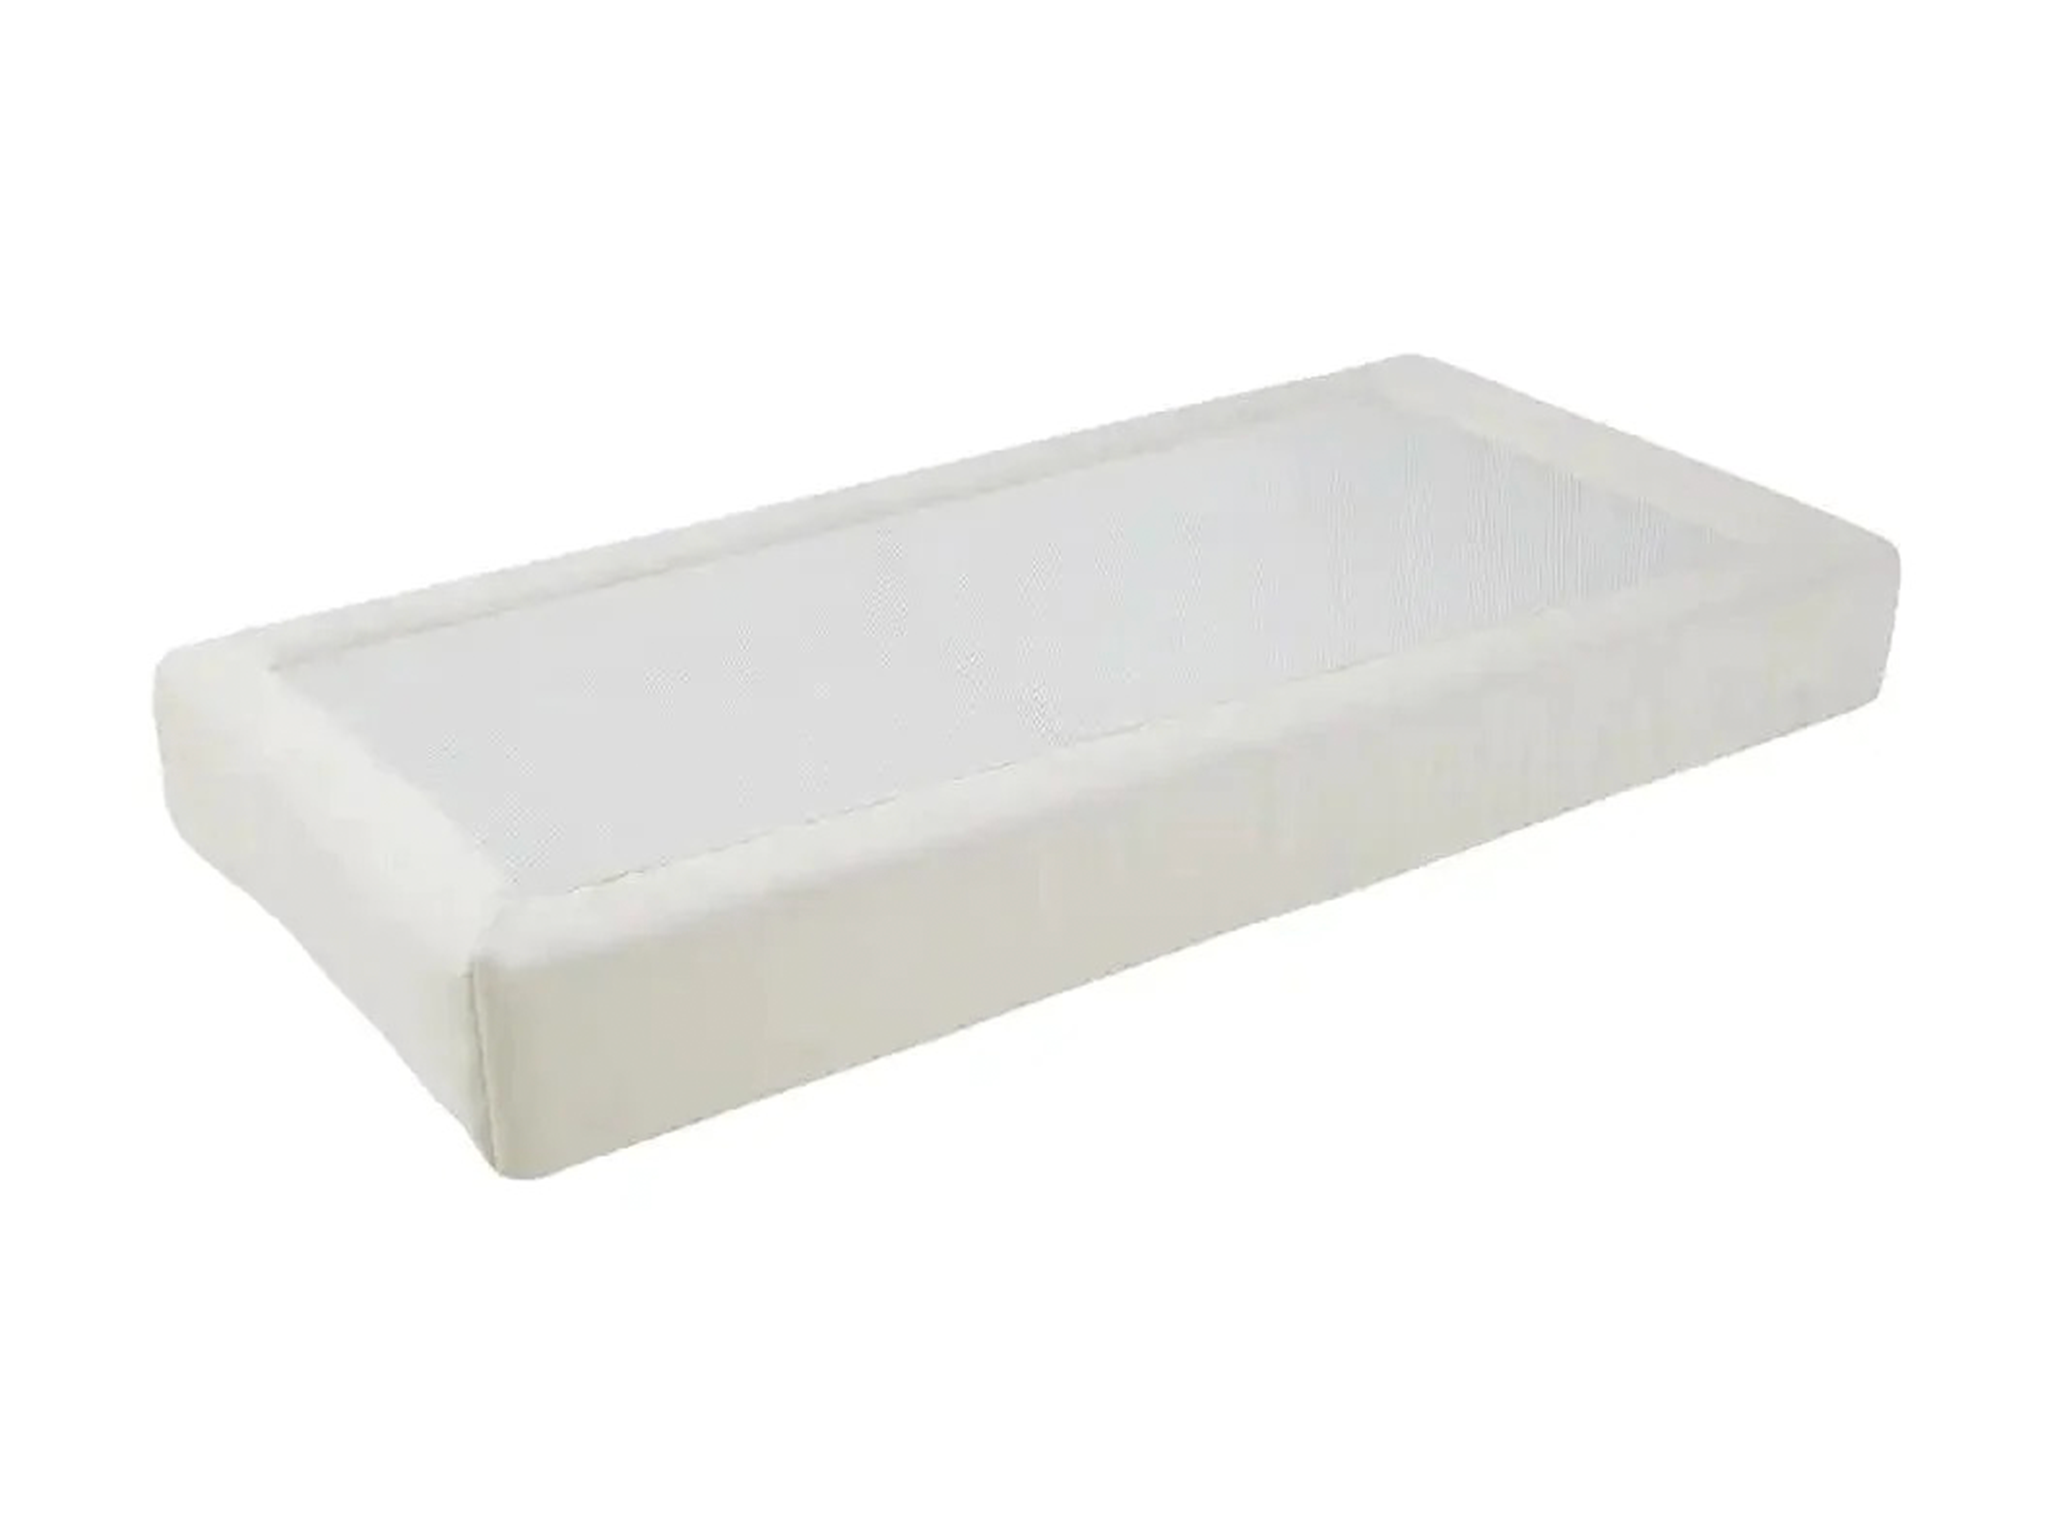 best cot mattress Purflo breathable cot bed mattress